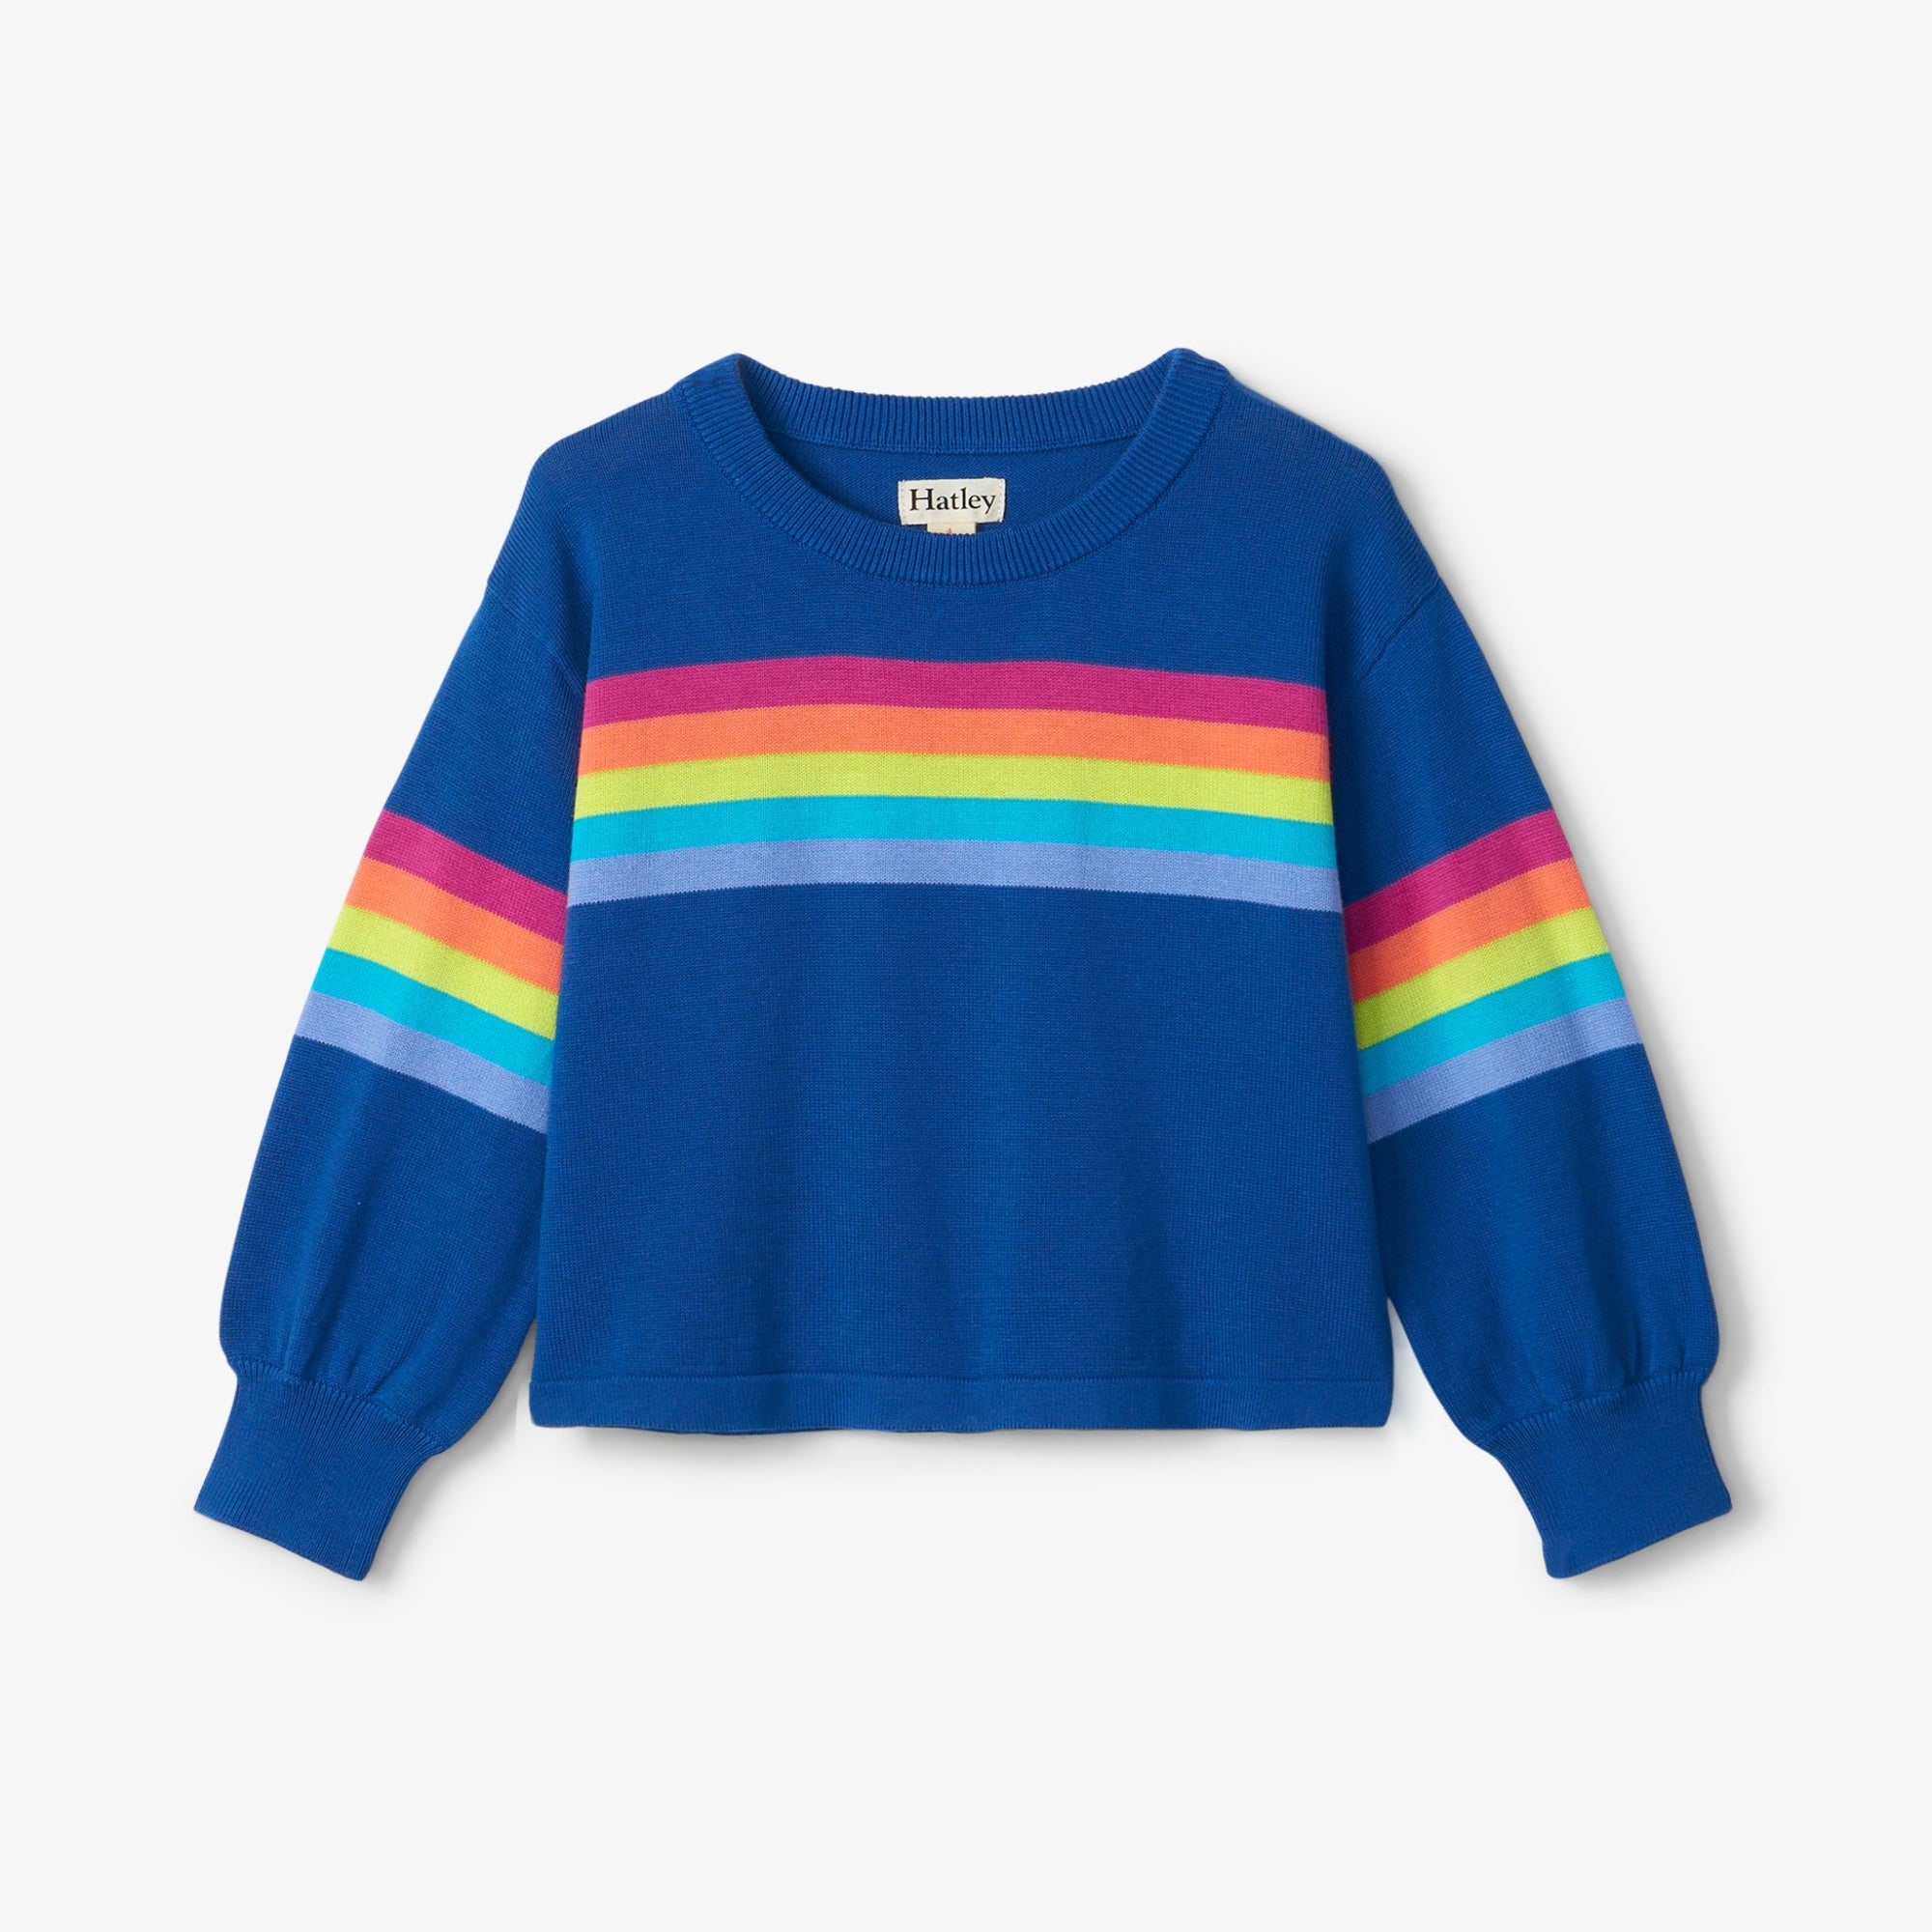 Hatley Girls Groovy Stripes Sweater - Blue Quartz